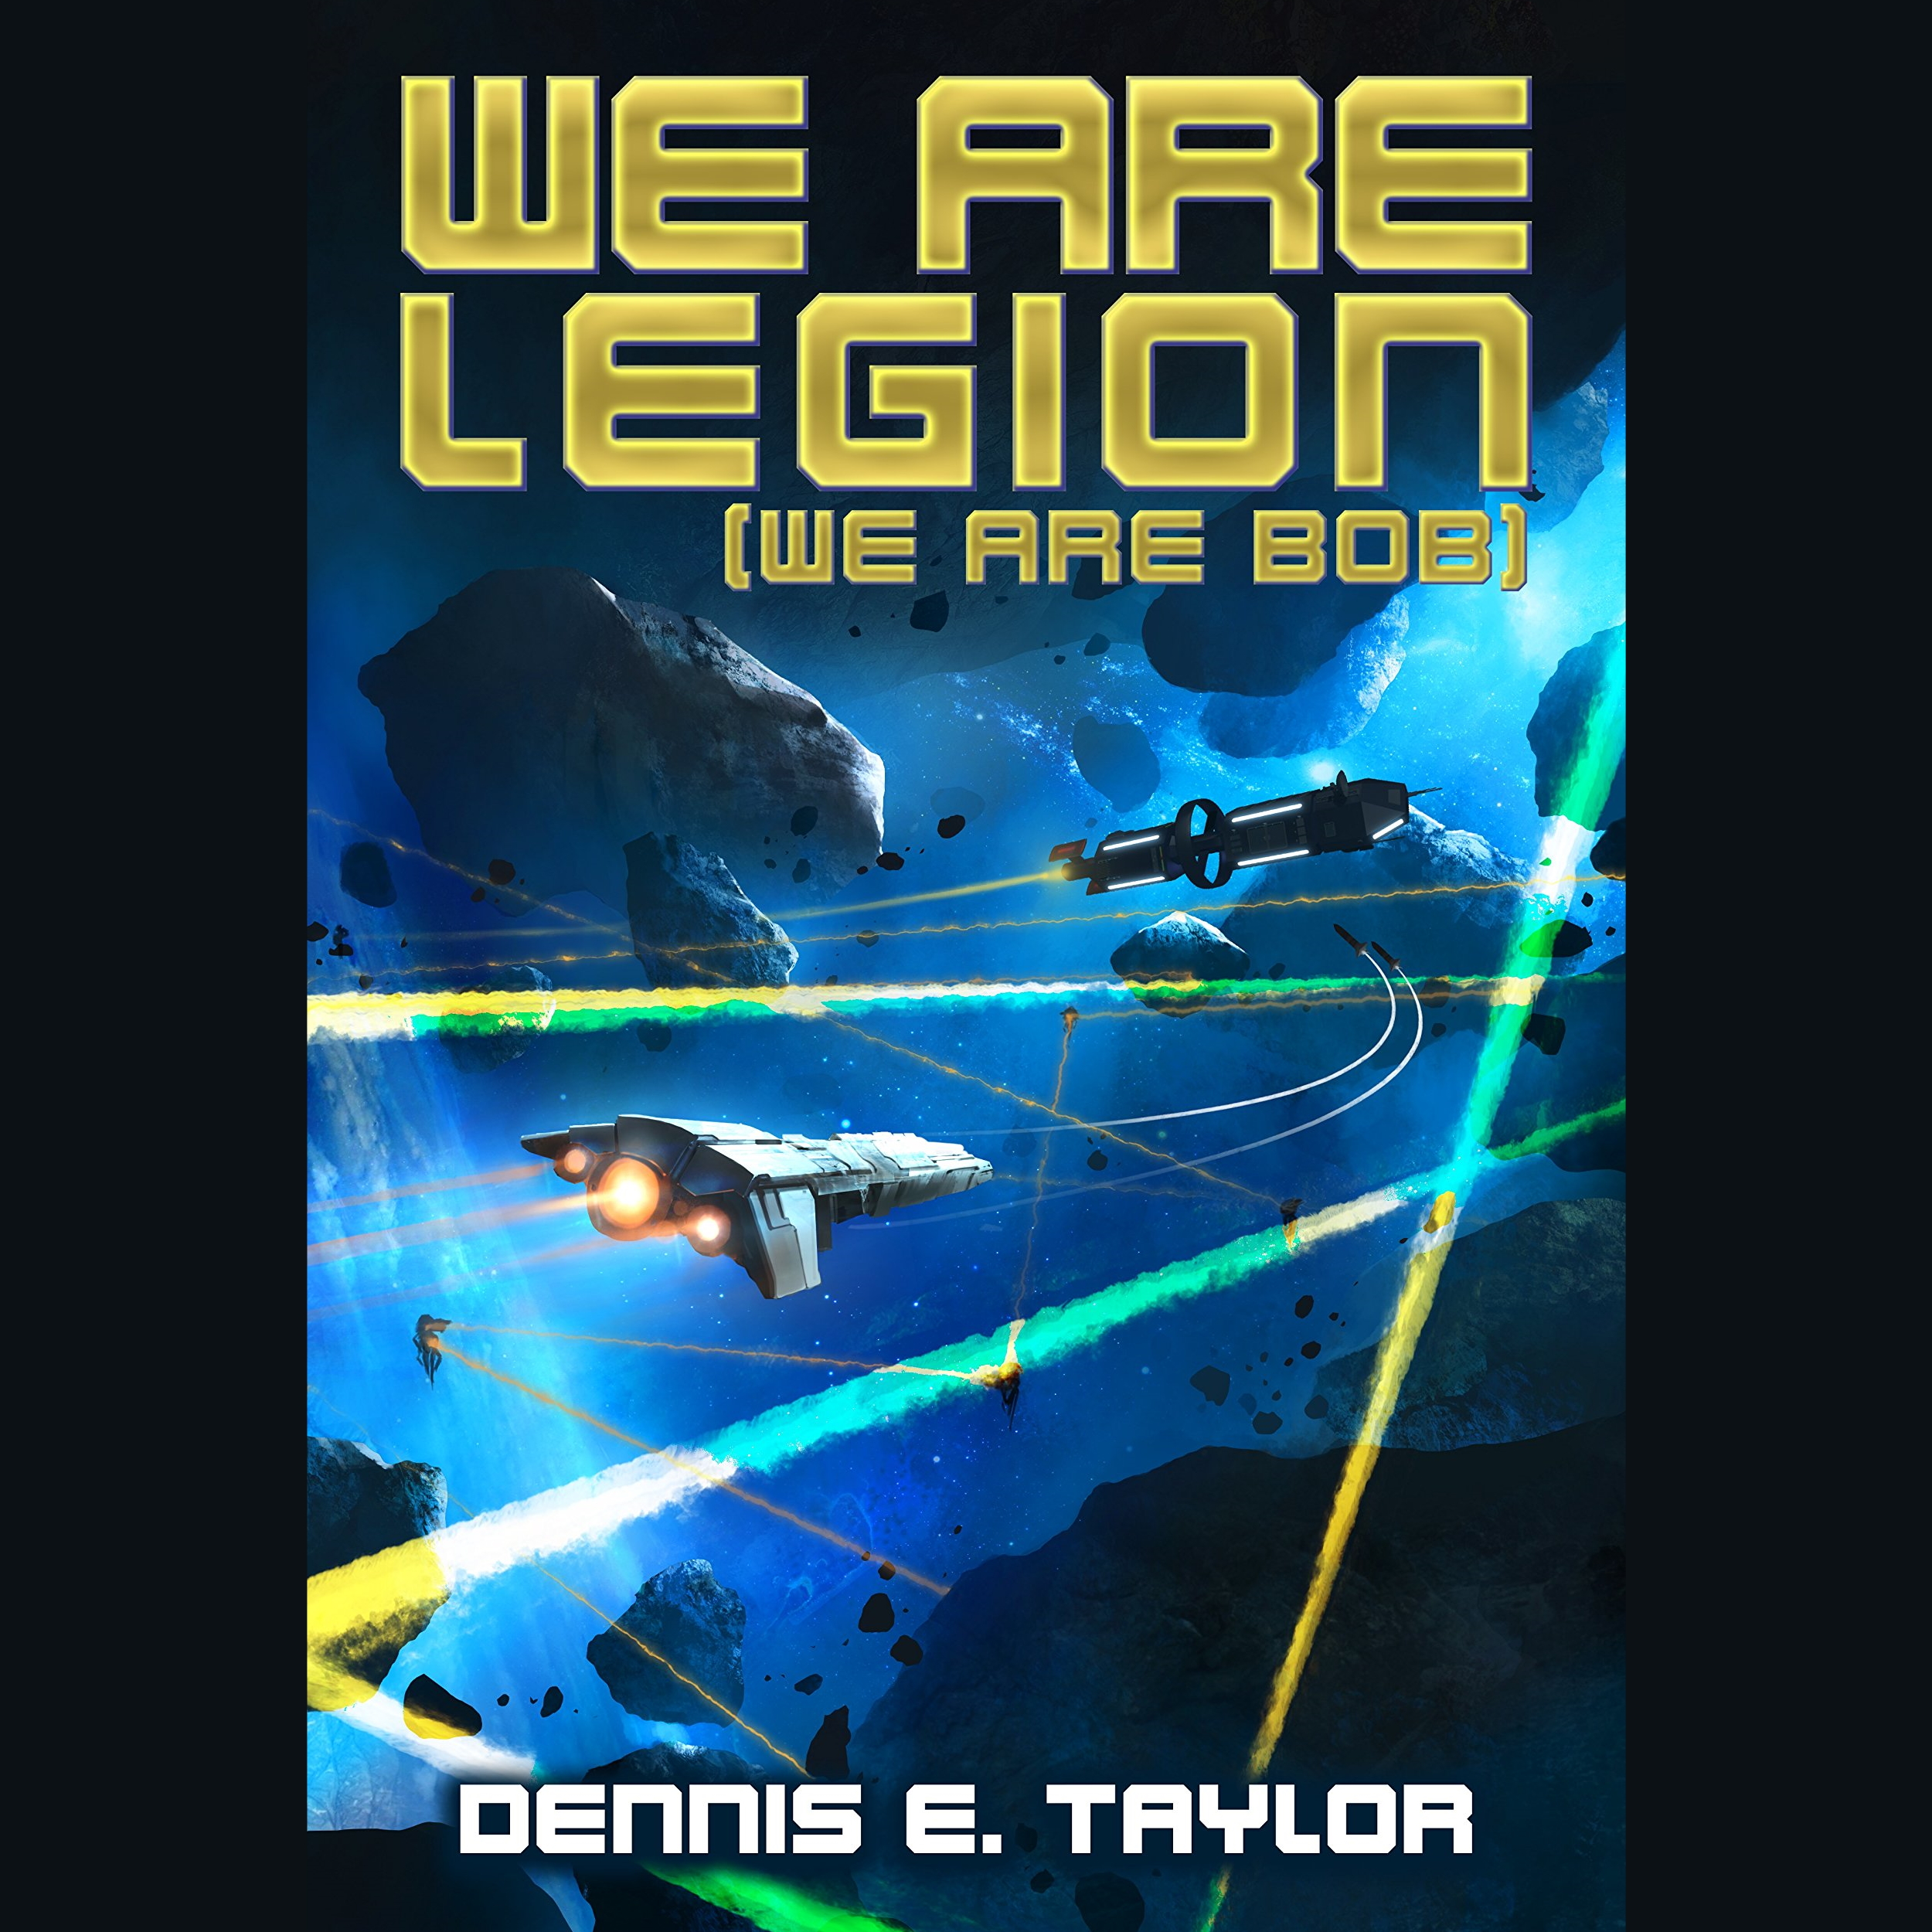 Dennis E. Taylor, Ray Porter: We Are Legion (We Are Bob) (AudiobookFormat, 2016, Audible Studios on Brilliance, Audible Studios on Brilliance Audio)